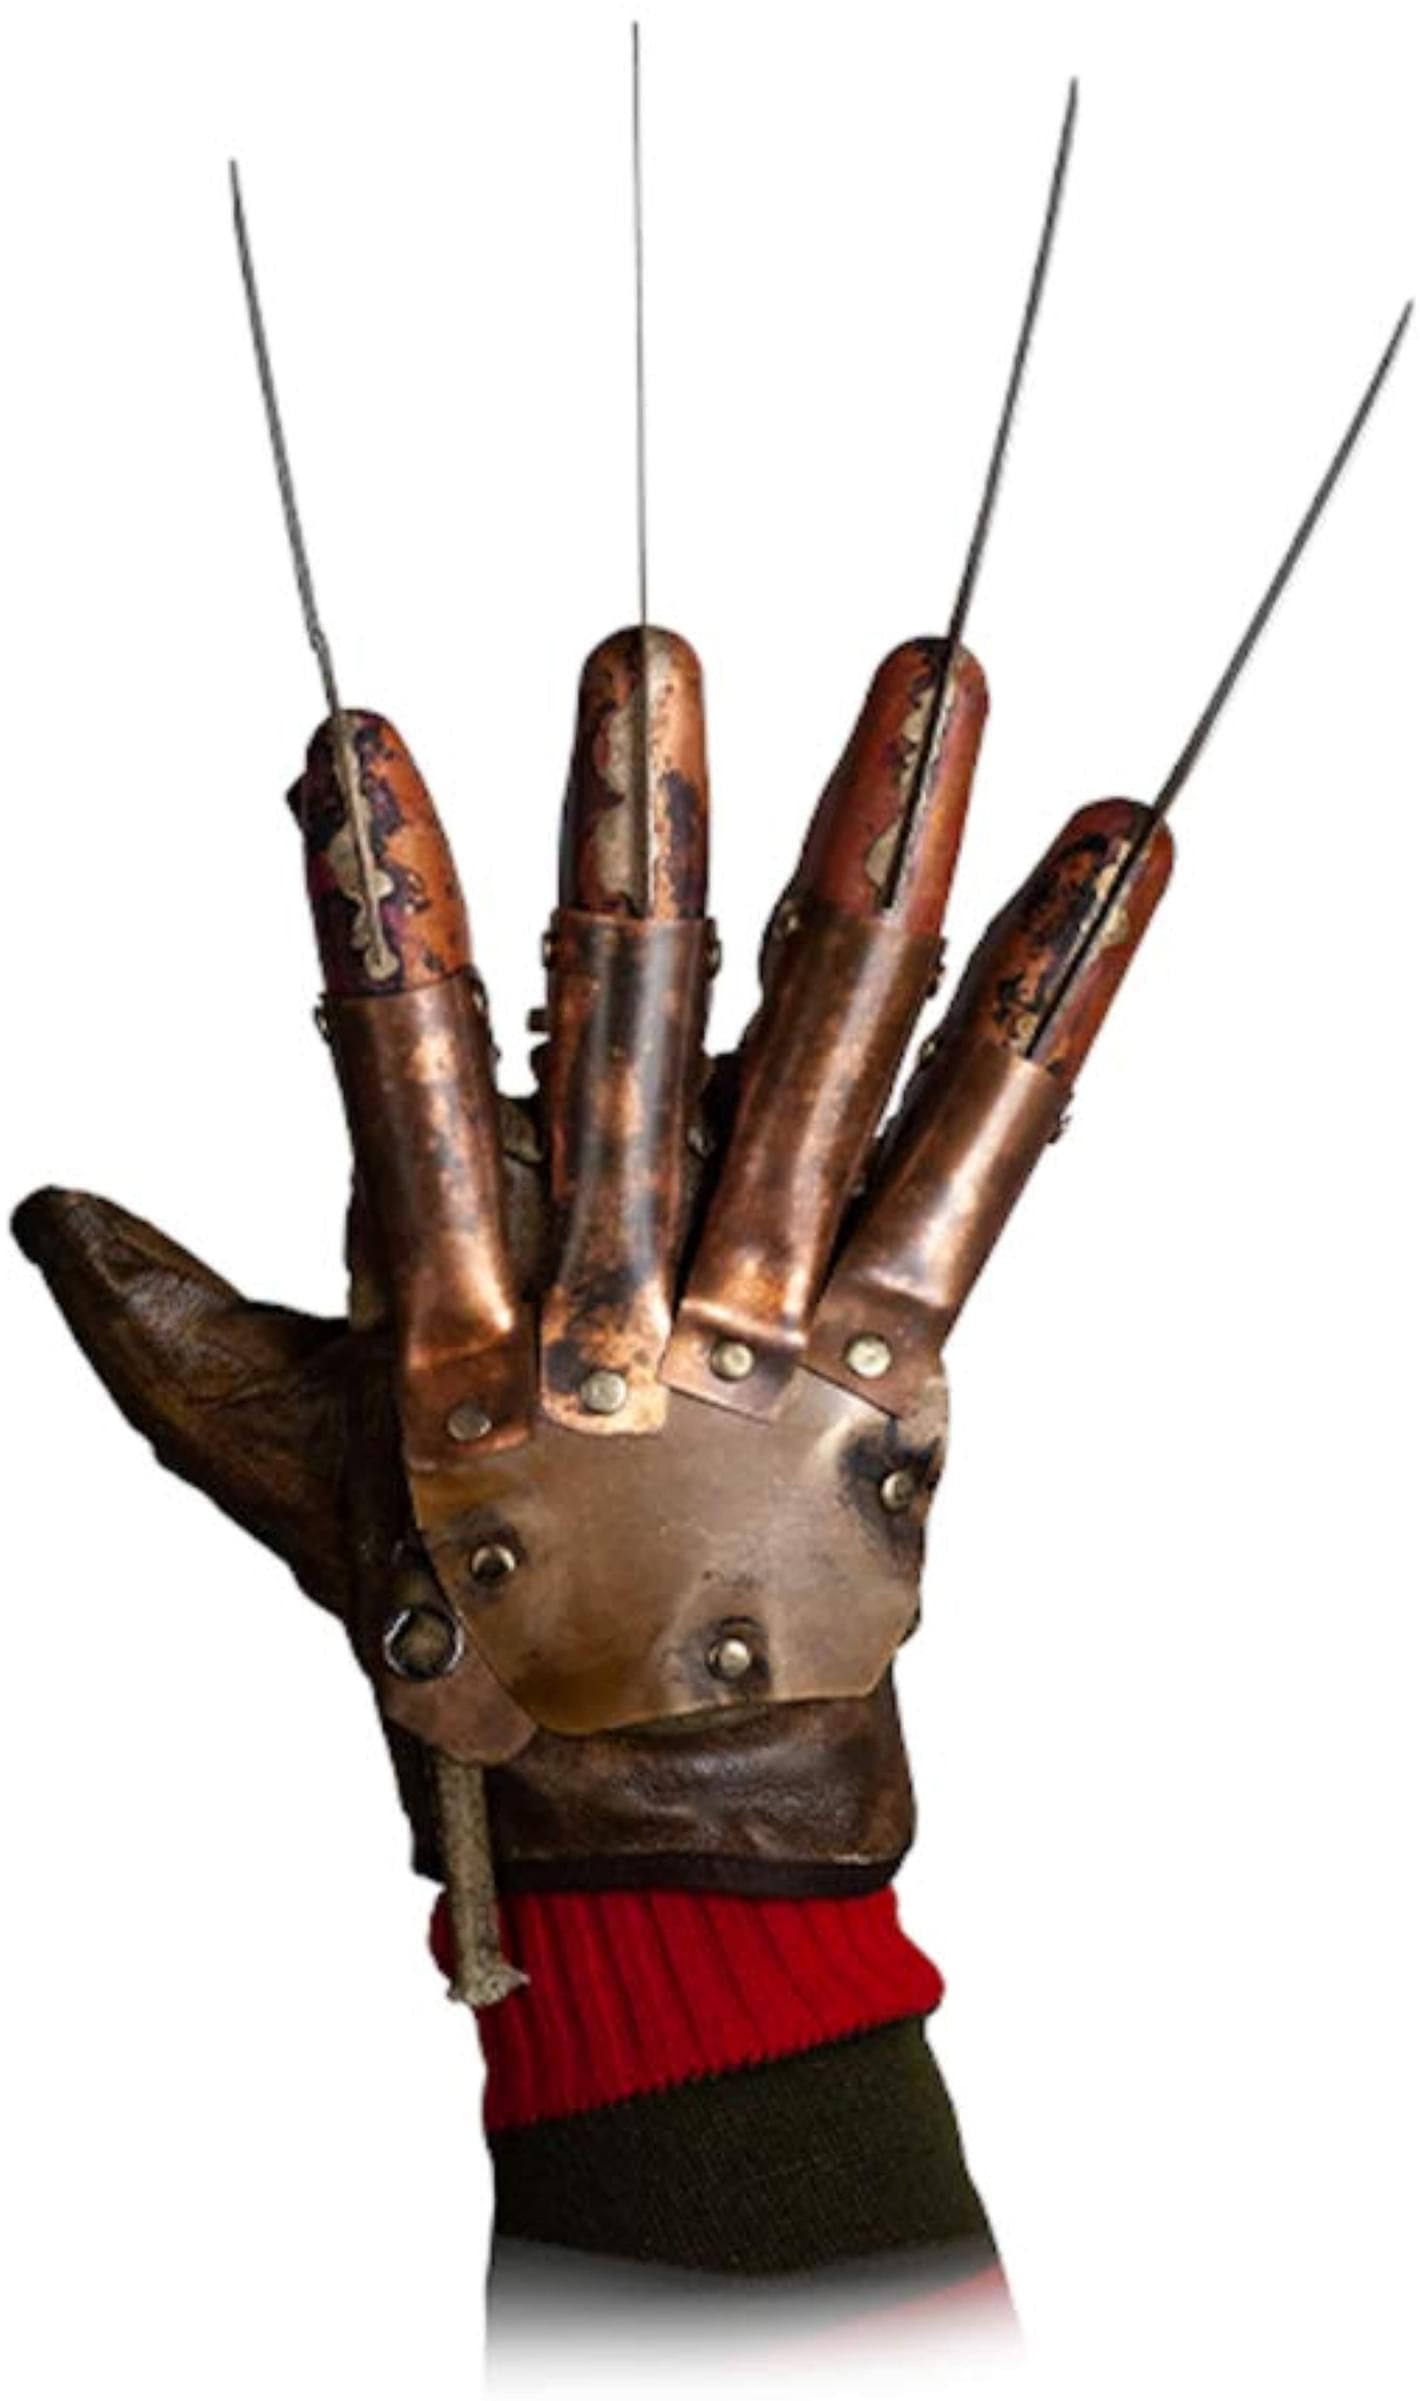 A Nightmare On Elm Street 2 Deluxe Freddy Krueger Replica Glove